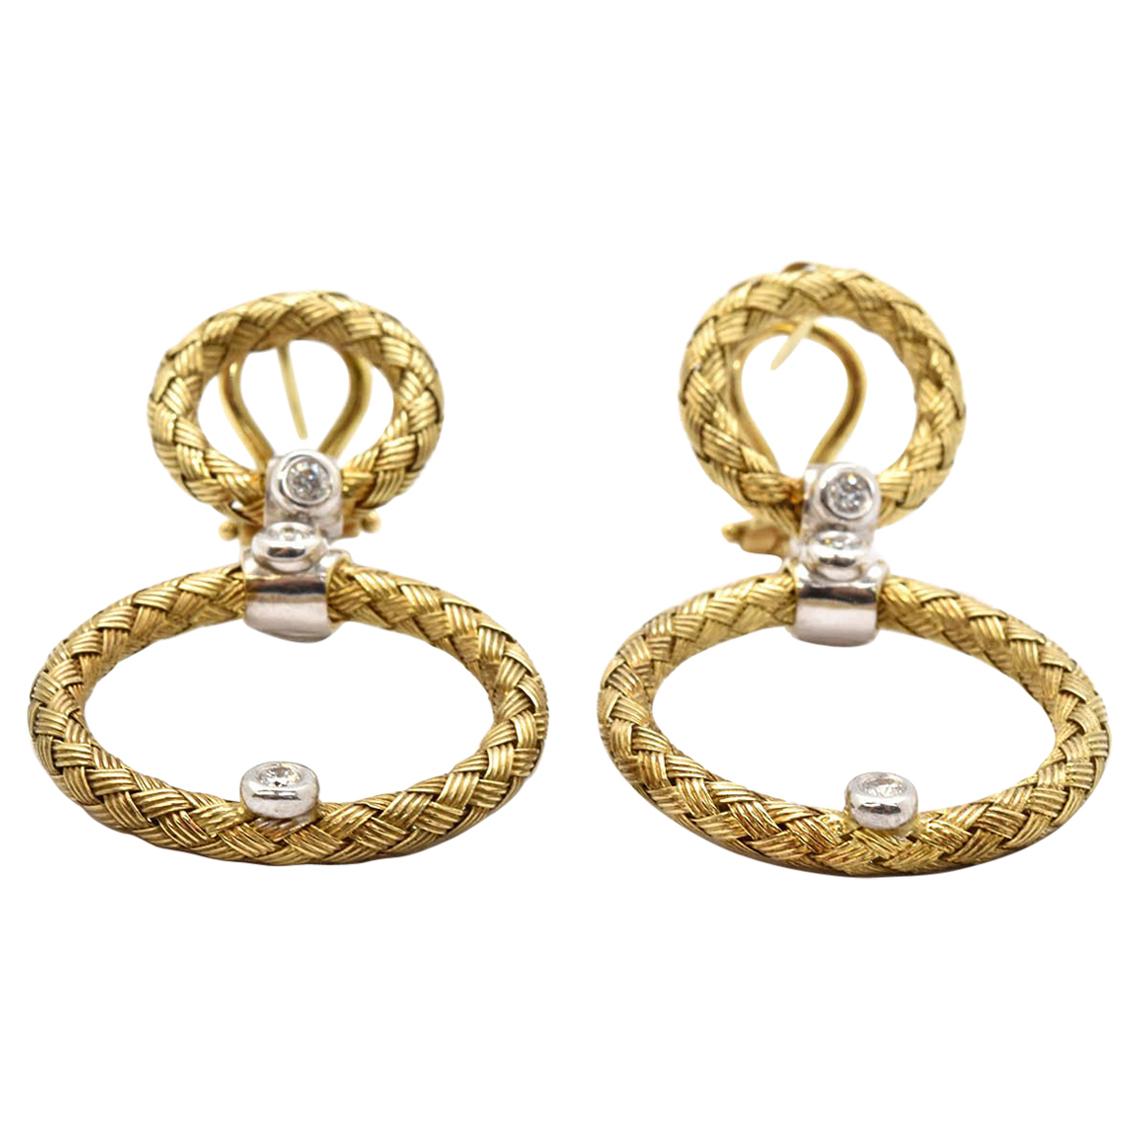 Daniel W. Woven 14 Karat Gold and 0.30 Carat Diamond Circle Dangle Earrings